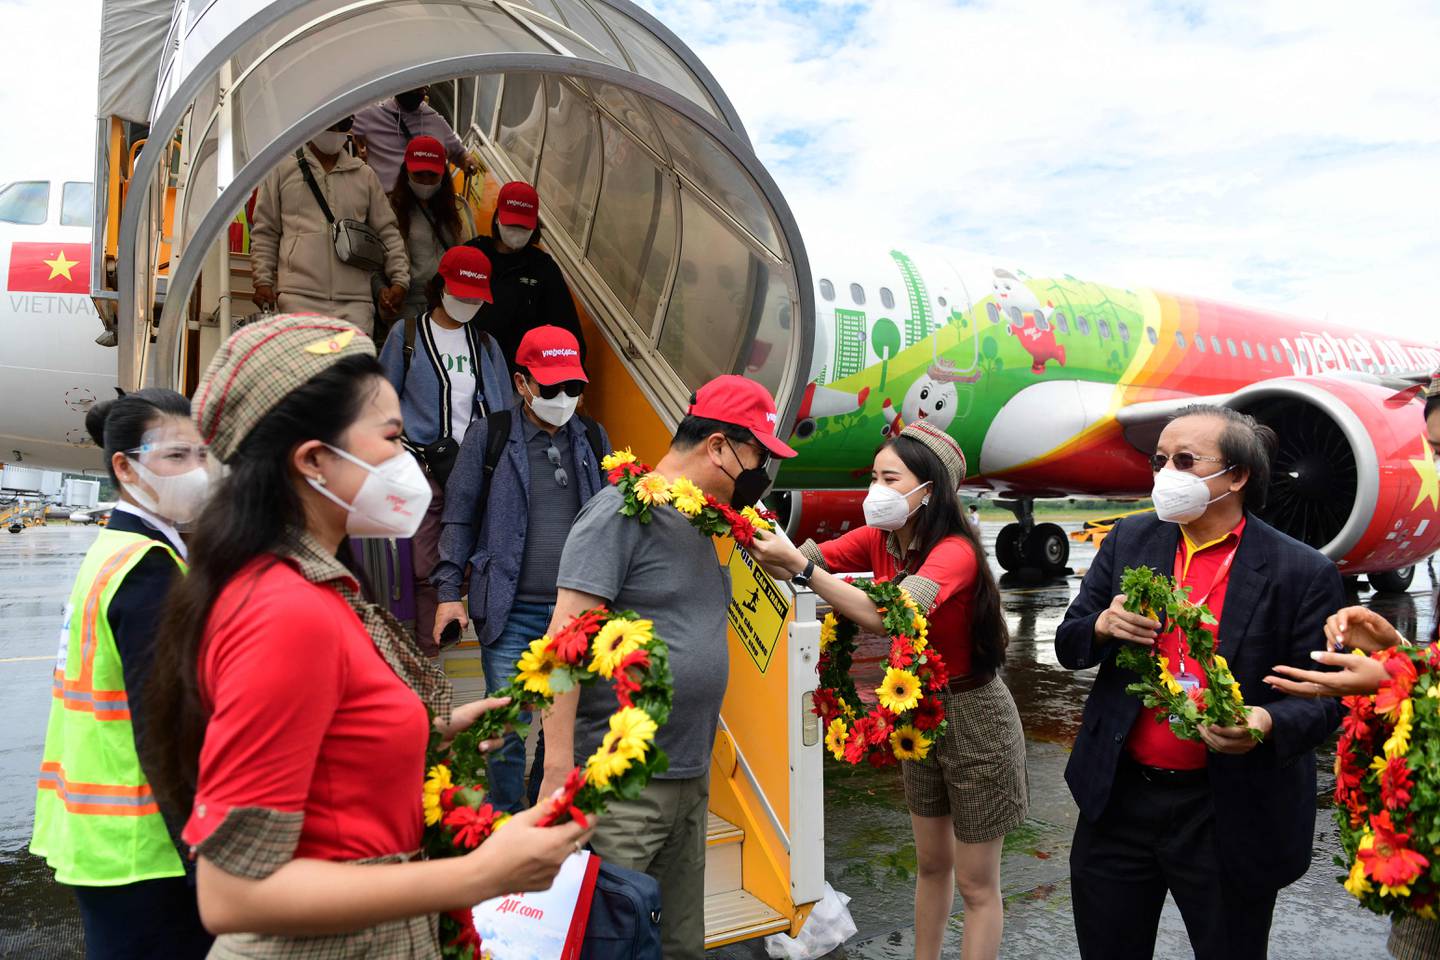 South Korean tourists arrive at Phu Quoc International Airport, as the Vietnamese island welcomed its first international tourists following a Covid-19 vaccine passport scheme. AFP